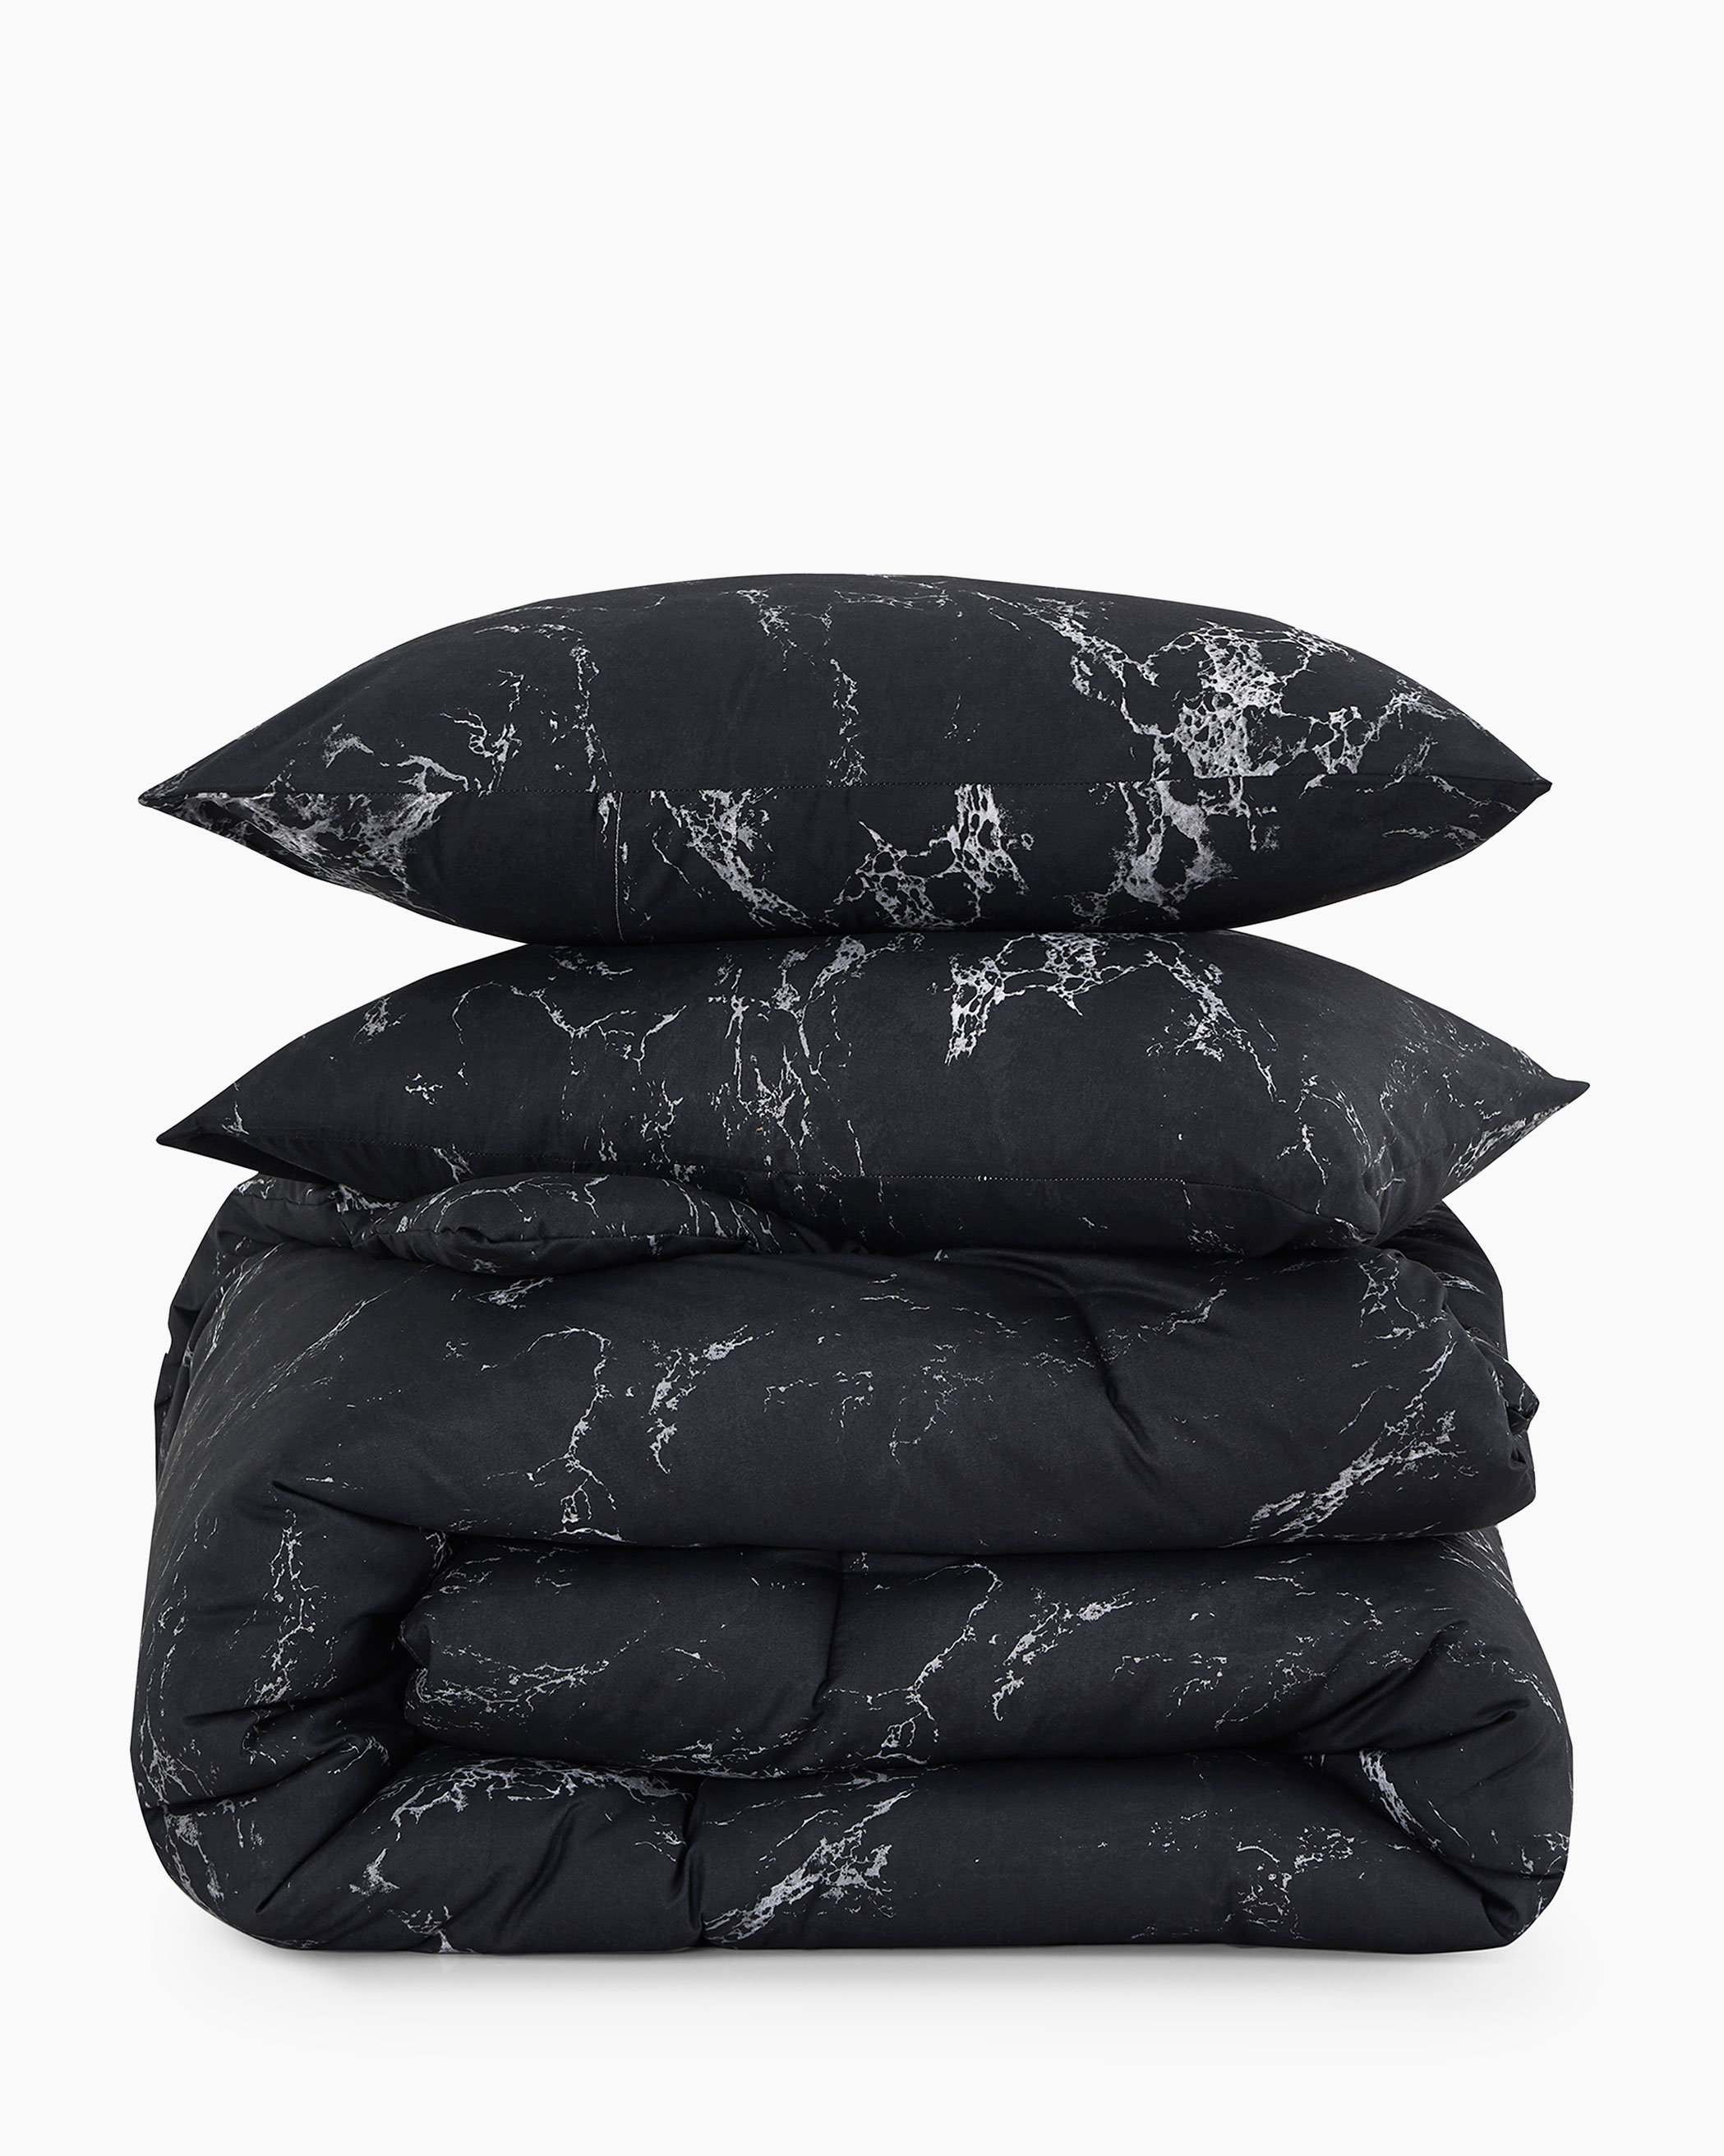 Black Marble Microfiber Comforter Set